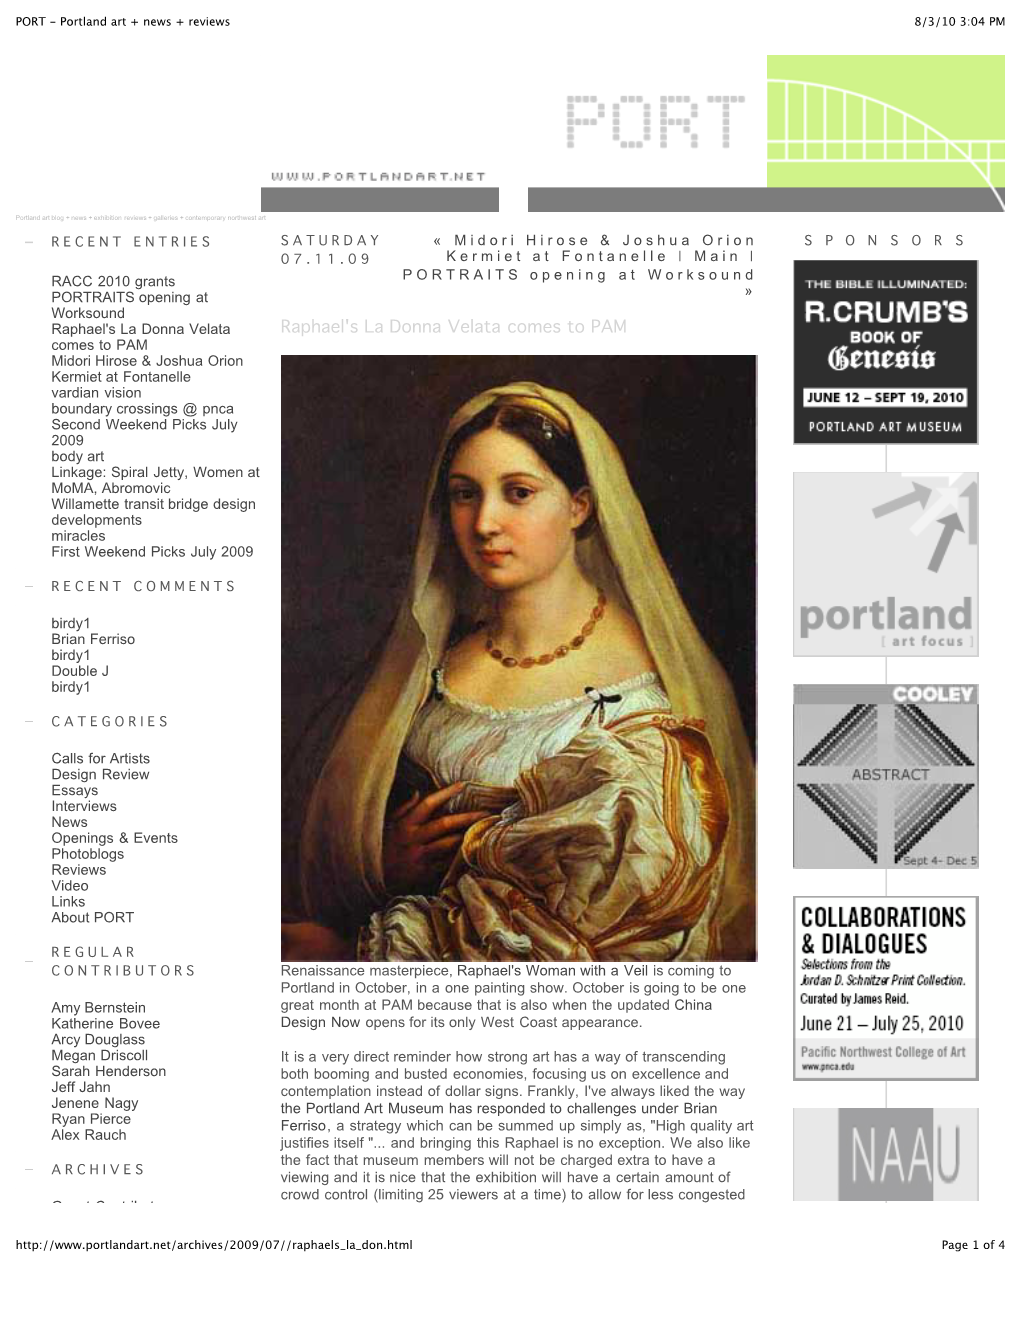 PORT - Portland Art + News + Reviews 8/3/10 3:04 PM